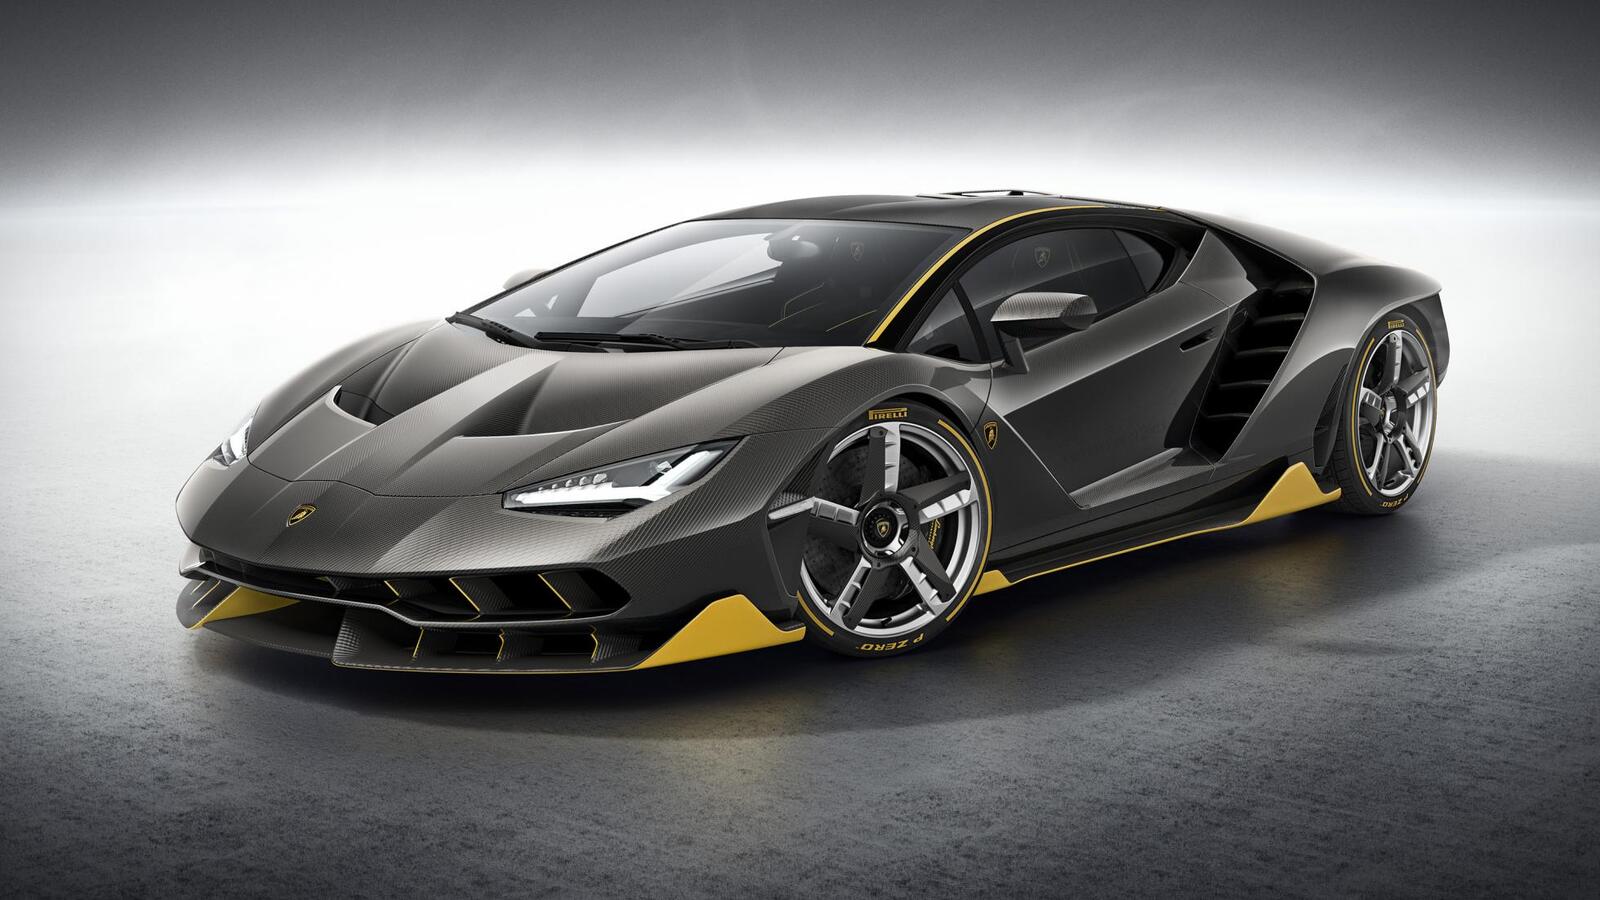 Free photo Lamborghini Centenario in carbon fiber body with yellow inlays